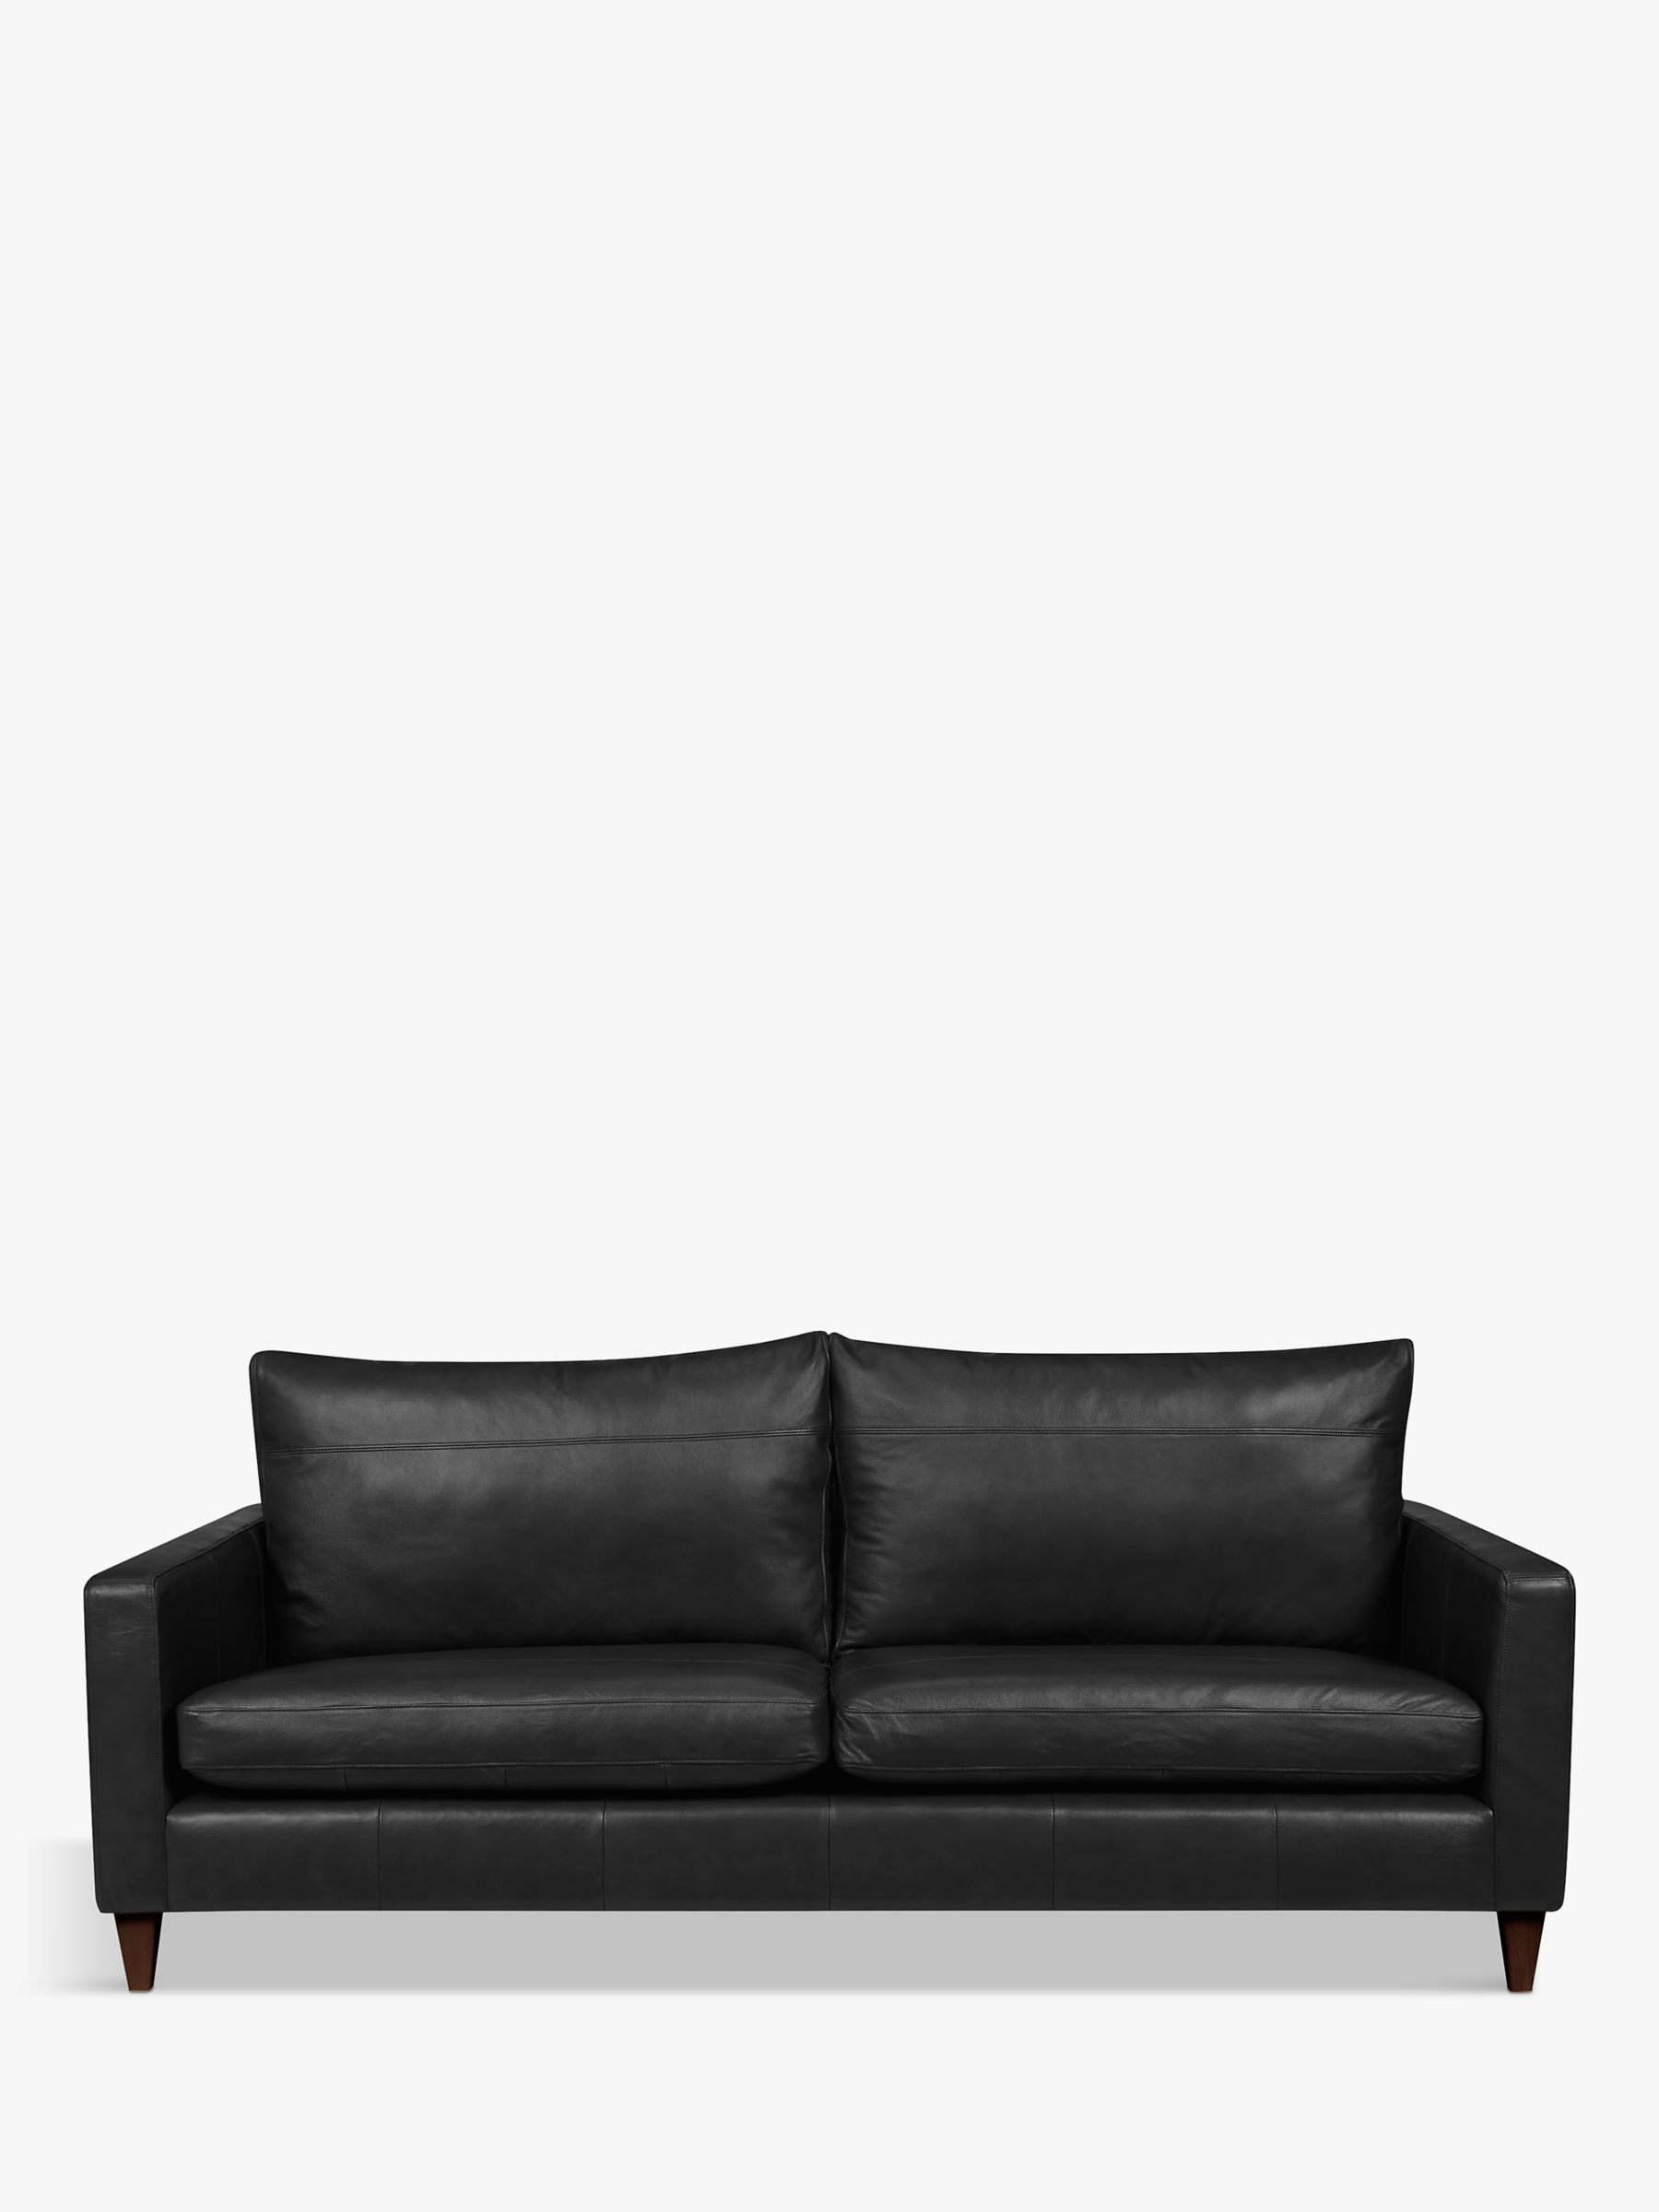 Bailey Range, John Lewis Bailey Grand 4 Seater Leather Sofa, Dark Leg, Contempo Black